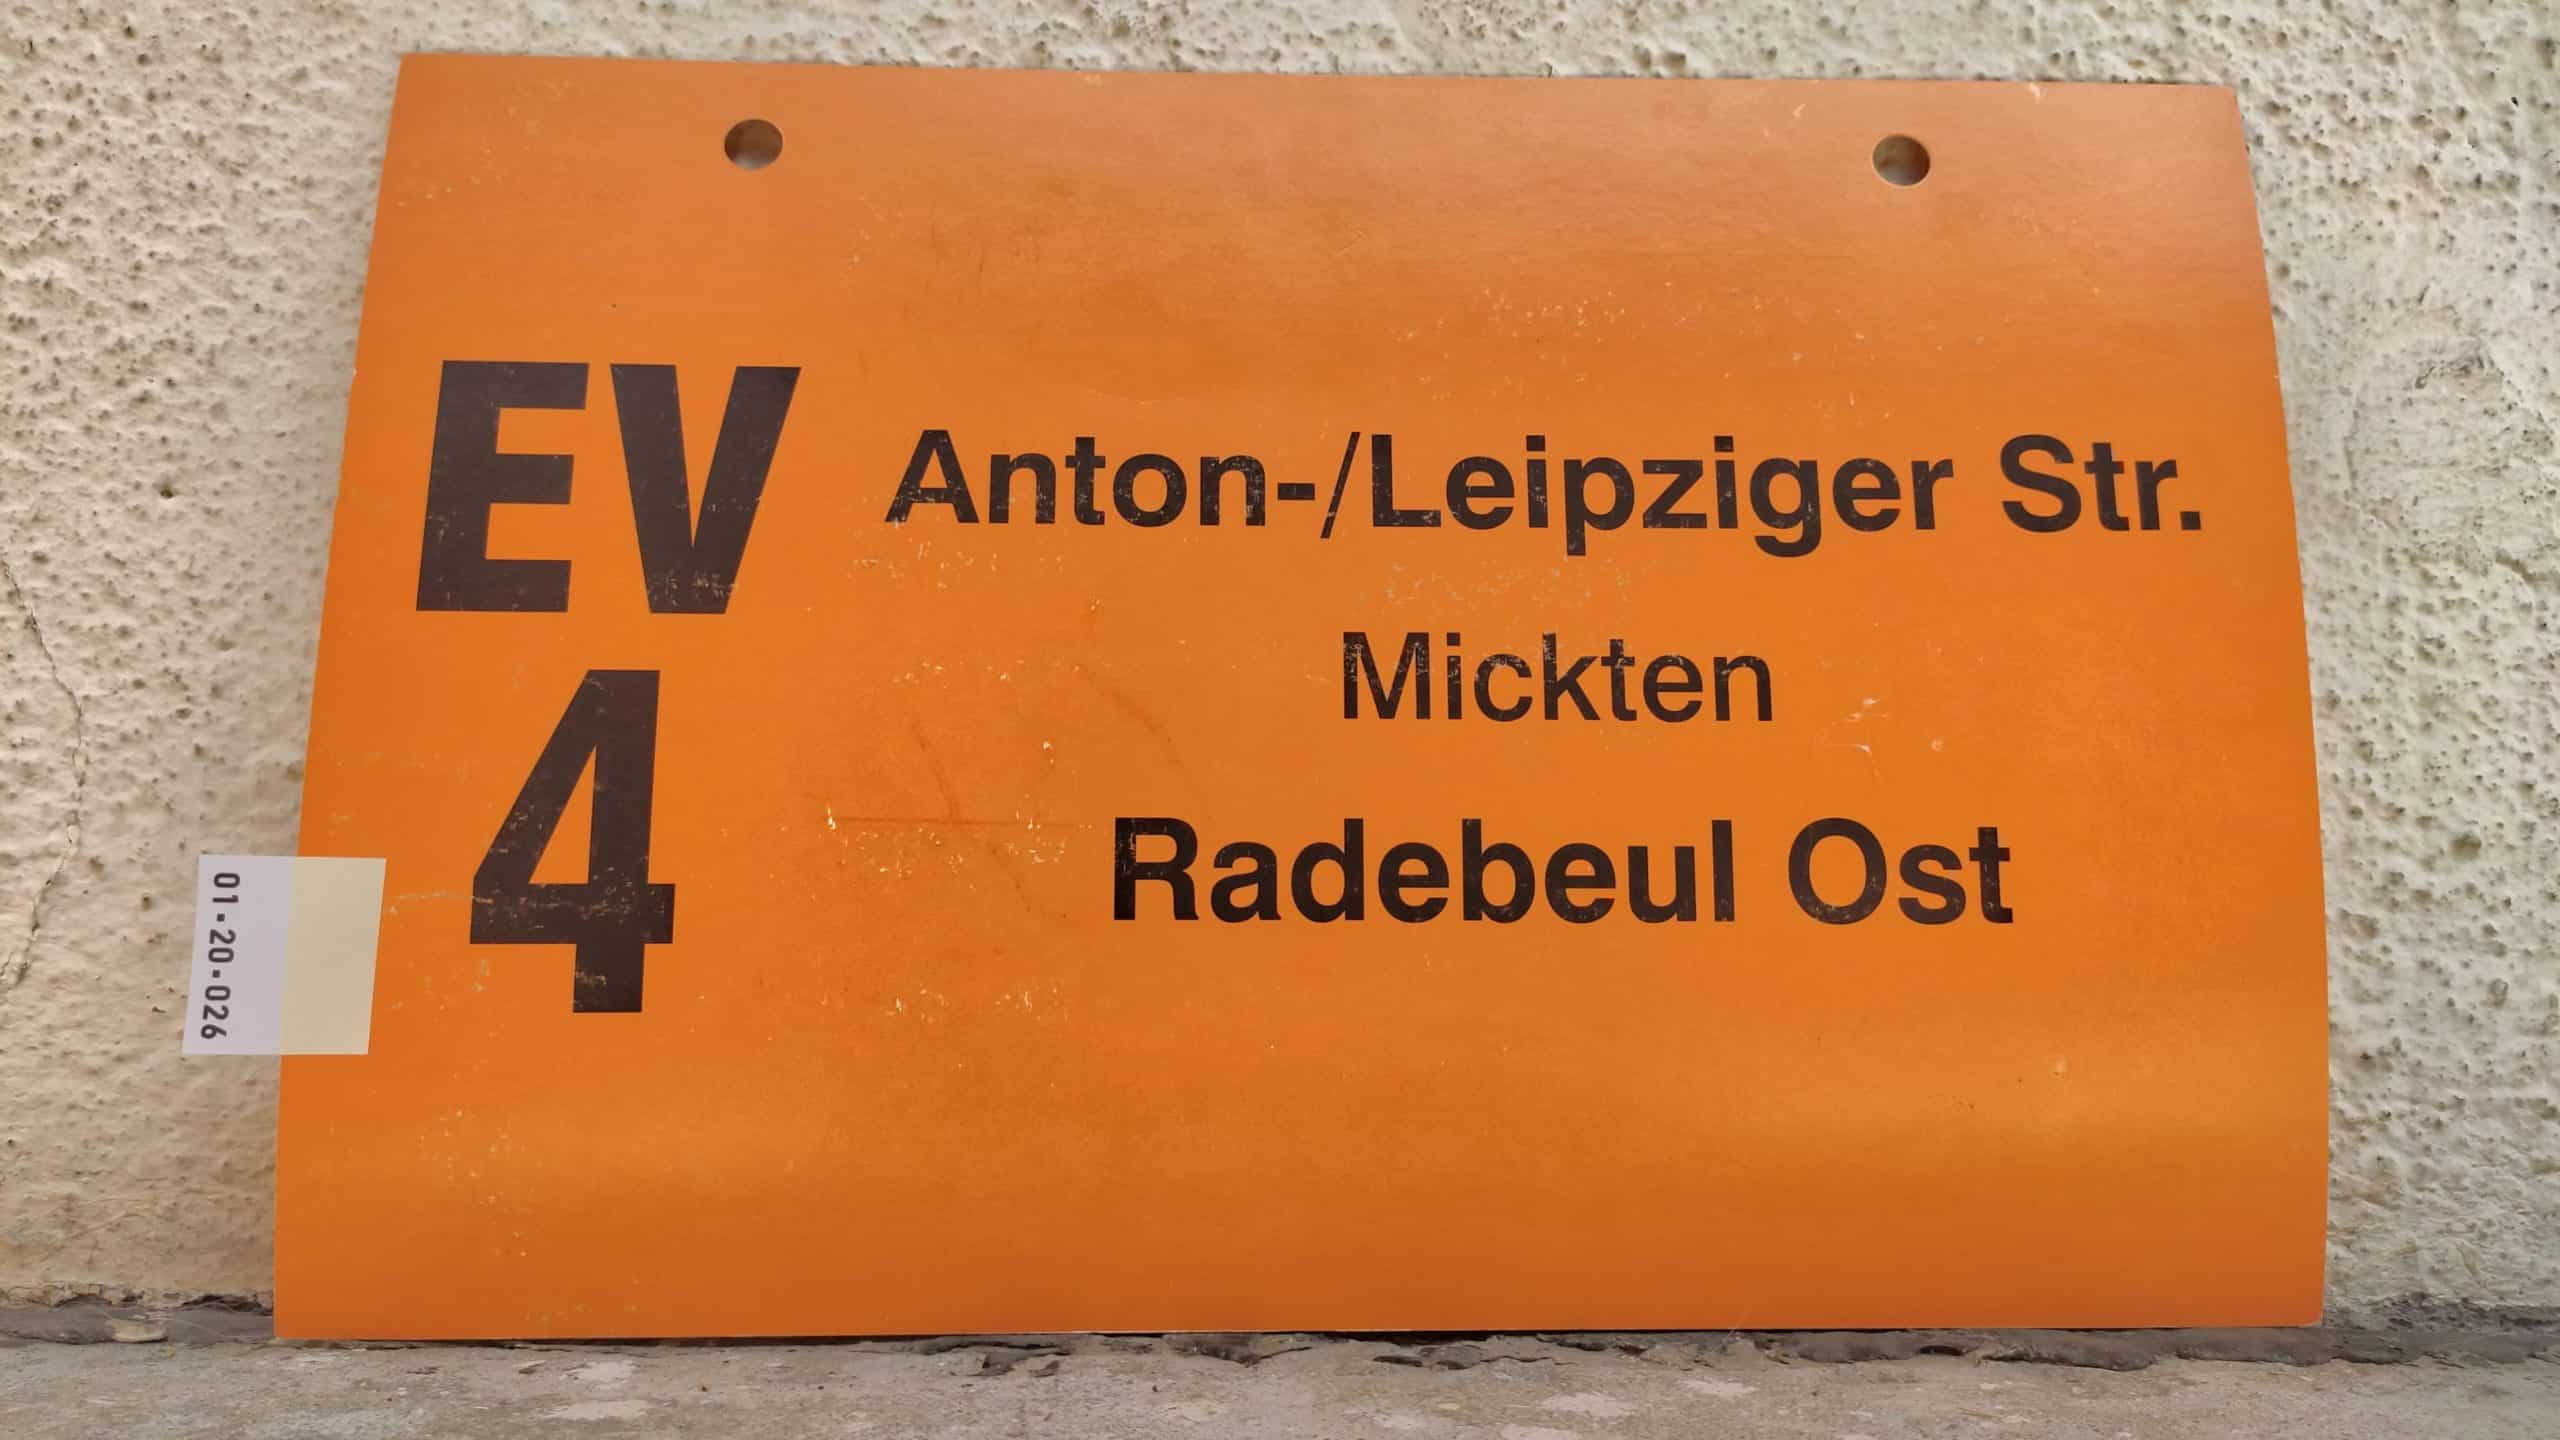 EV 4 Anton-/Leipziger Str. – Radebeul Ost